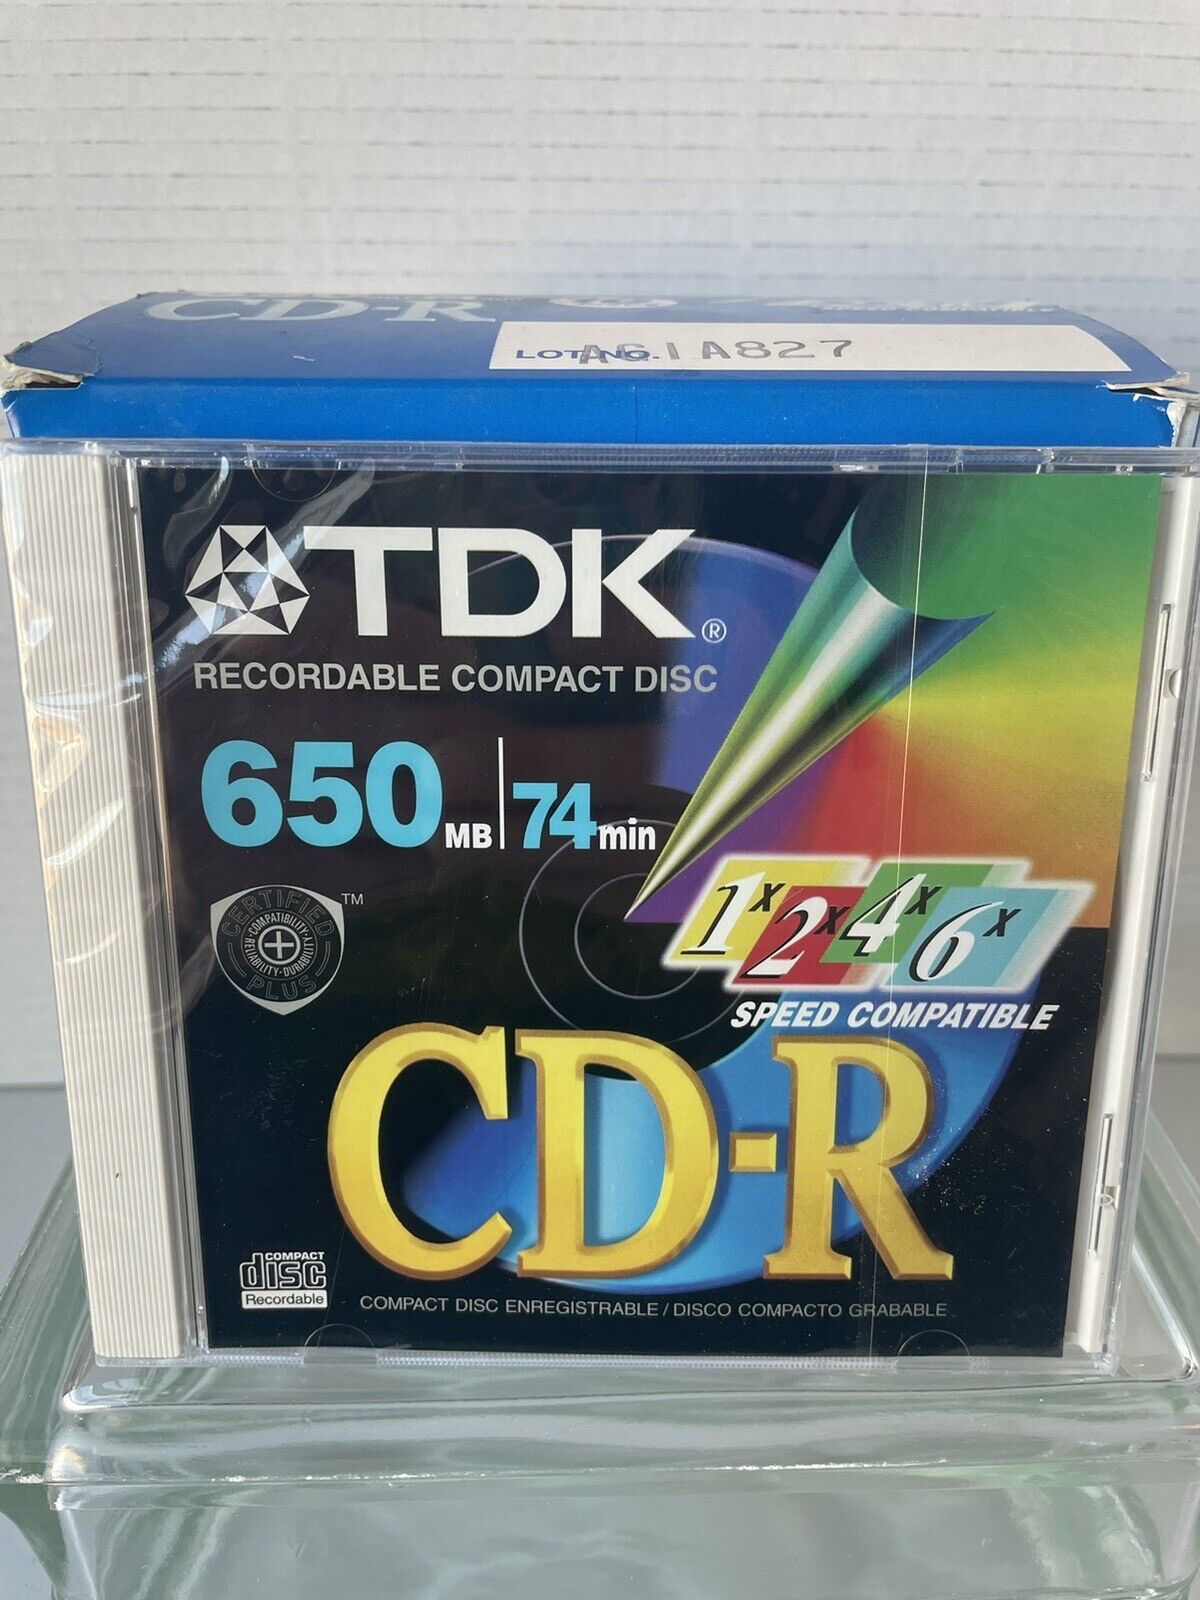 10 TDK CD-R 650 MB 74 Min up to 6x Recordable Compact Discs NIB